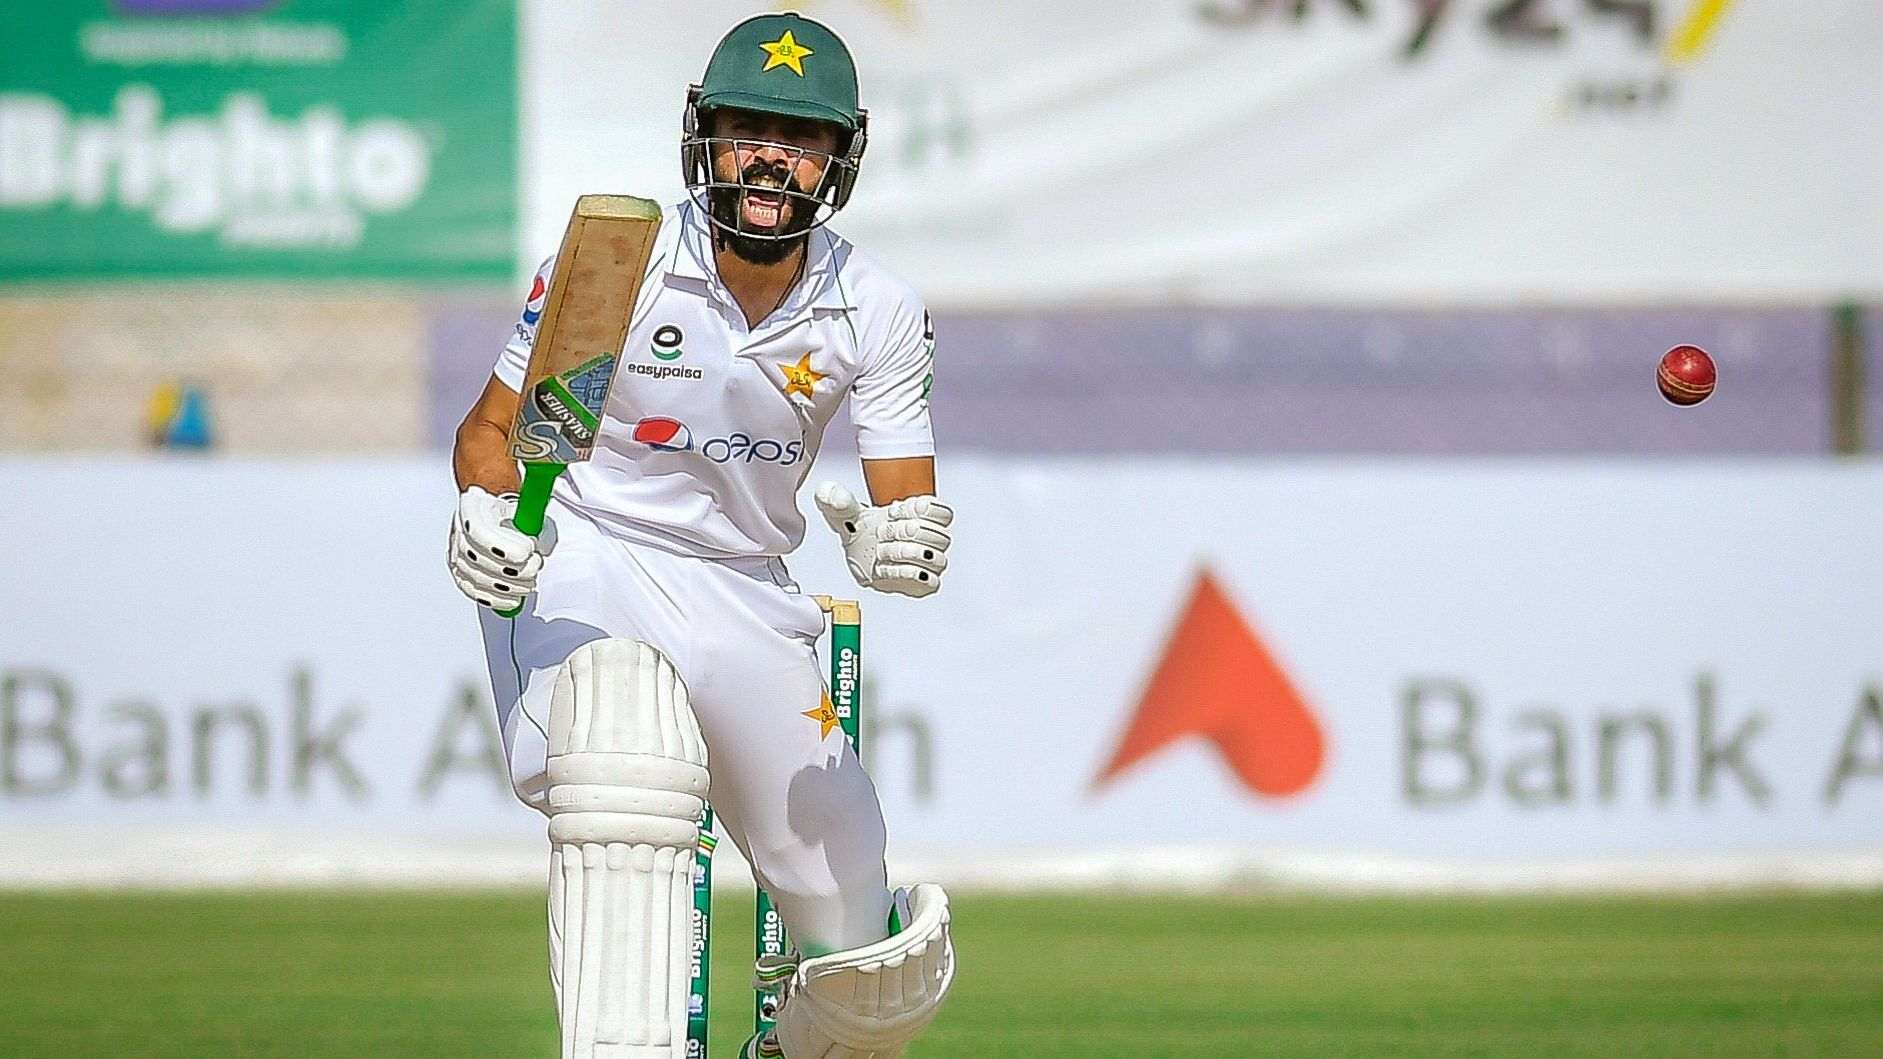 Fawad Alam celebrates Test cricket's return to Pakistan with a ton